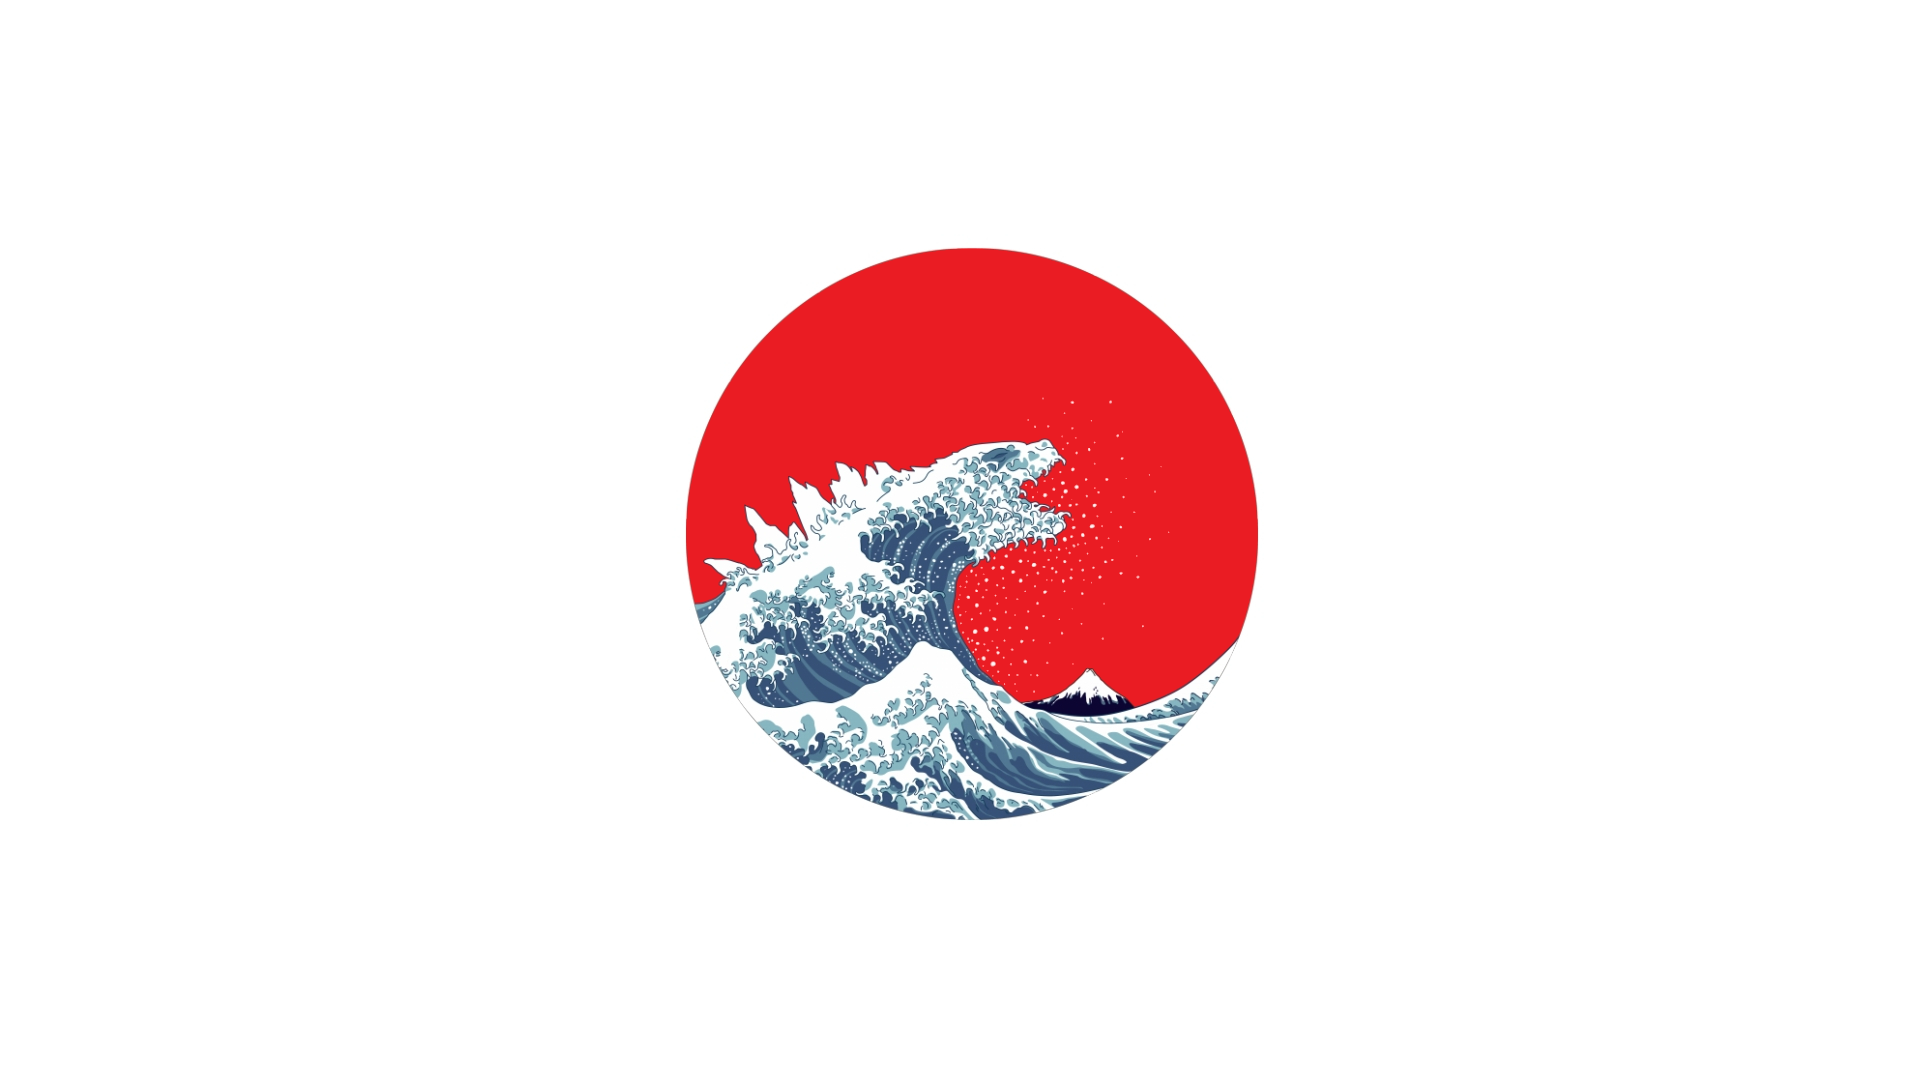 General 1920x1080 Japan The Great Wave of Kanagawa waves minimalism Godzilla artwork white background Asia creature Ukiyo-e